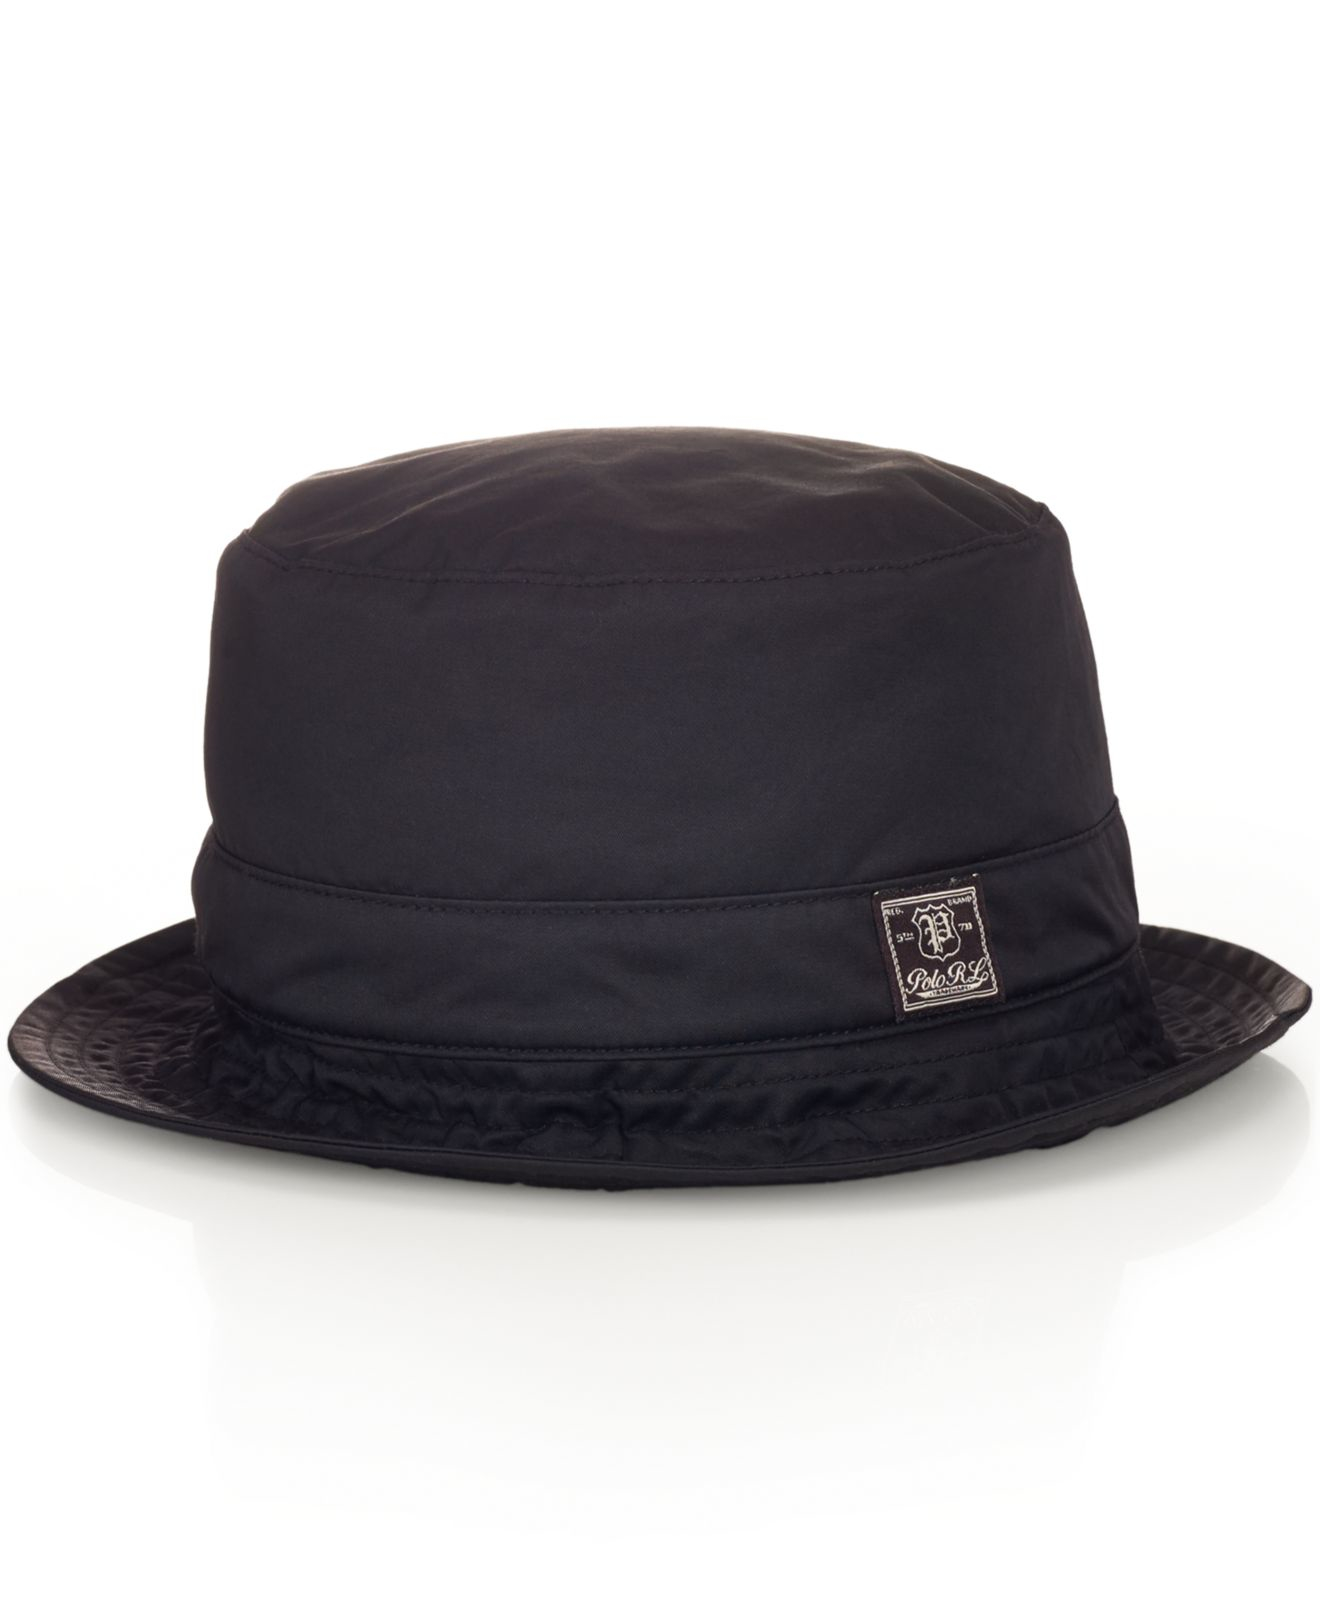 Polo Ralph Lauren Twill Bucket Hat in Black for Men - Lyst